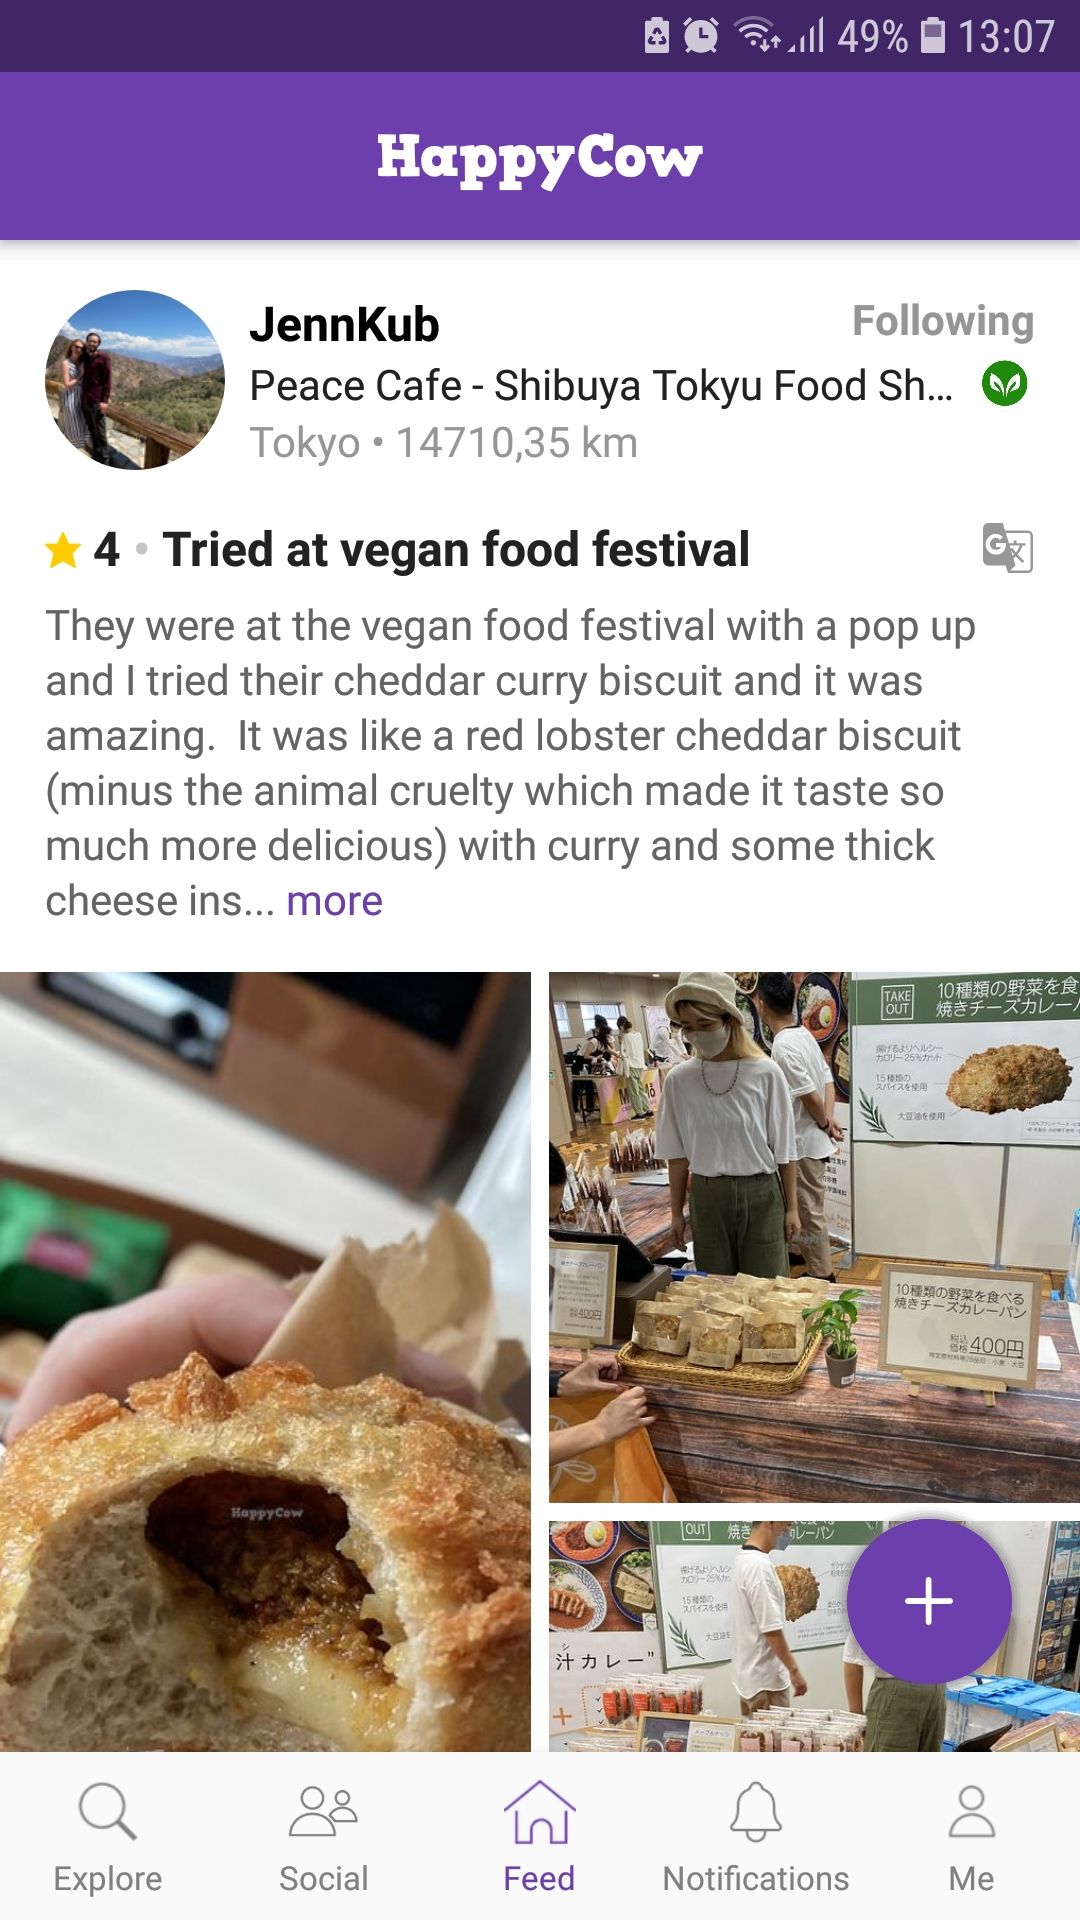 HappyCow mobile food app feed